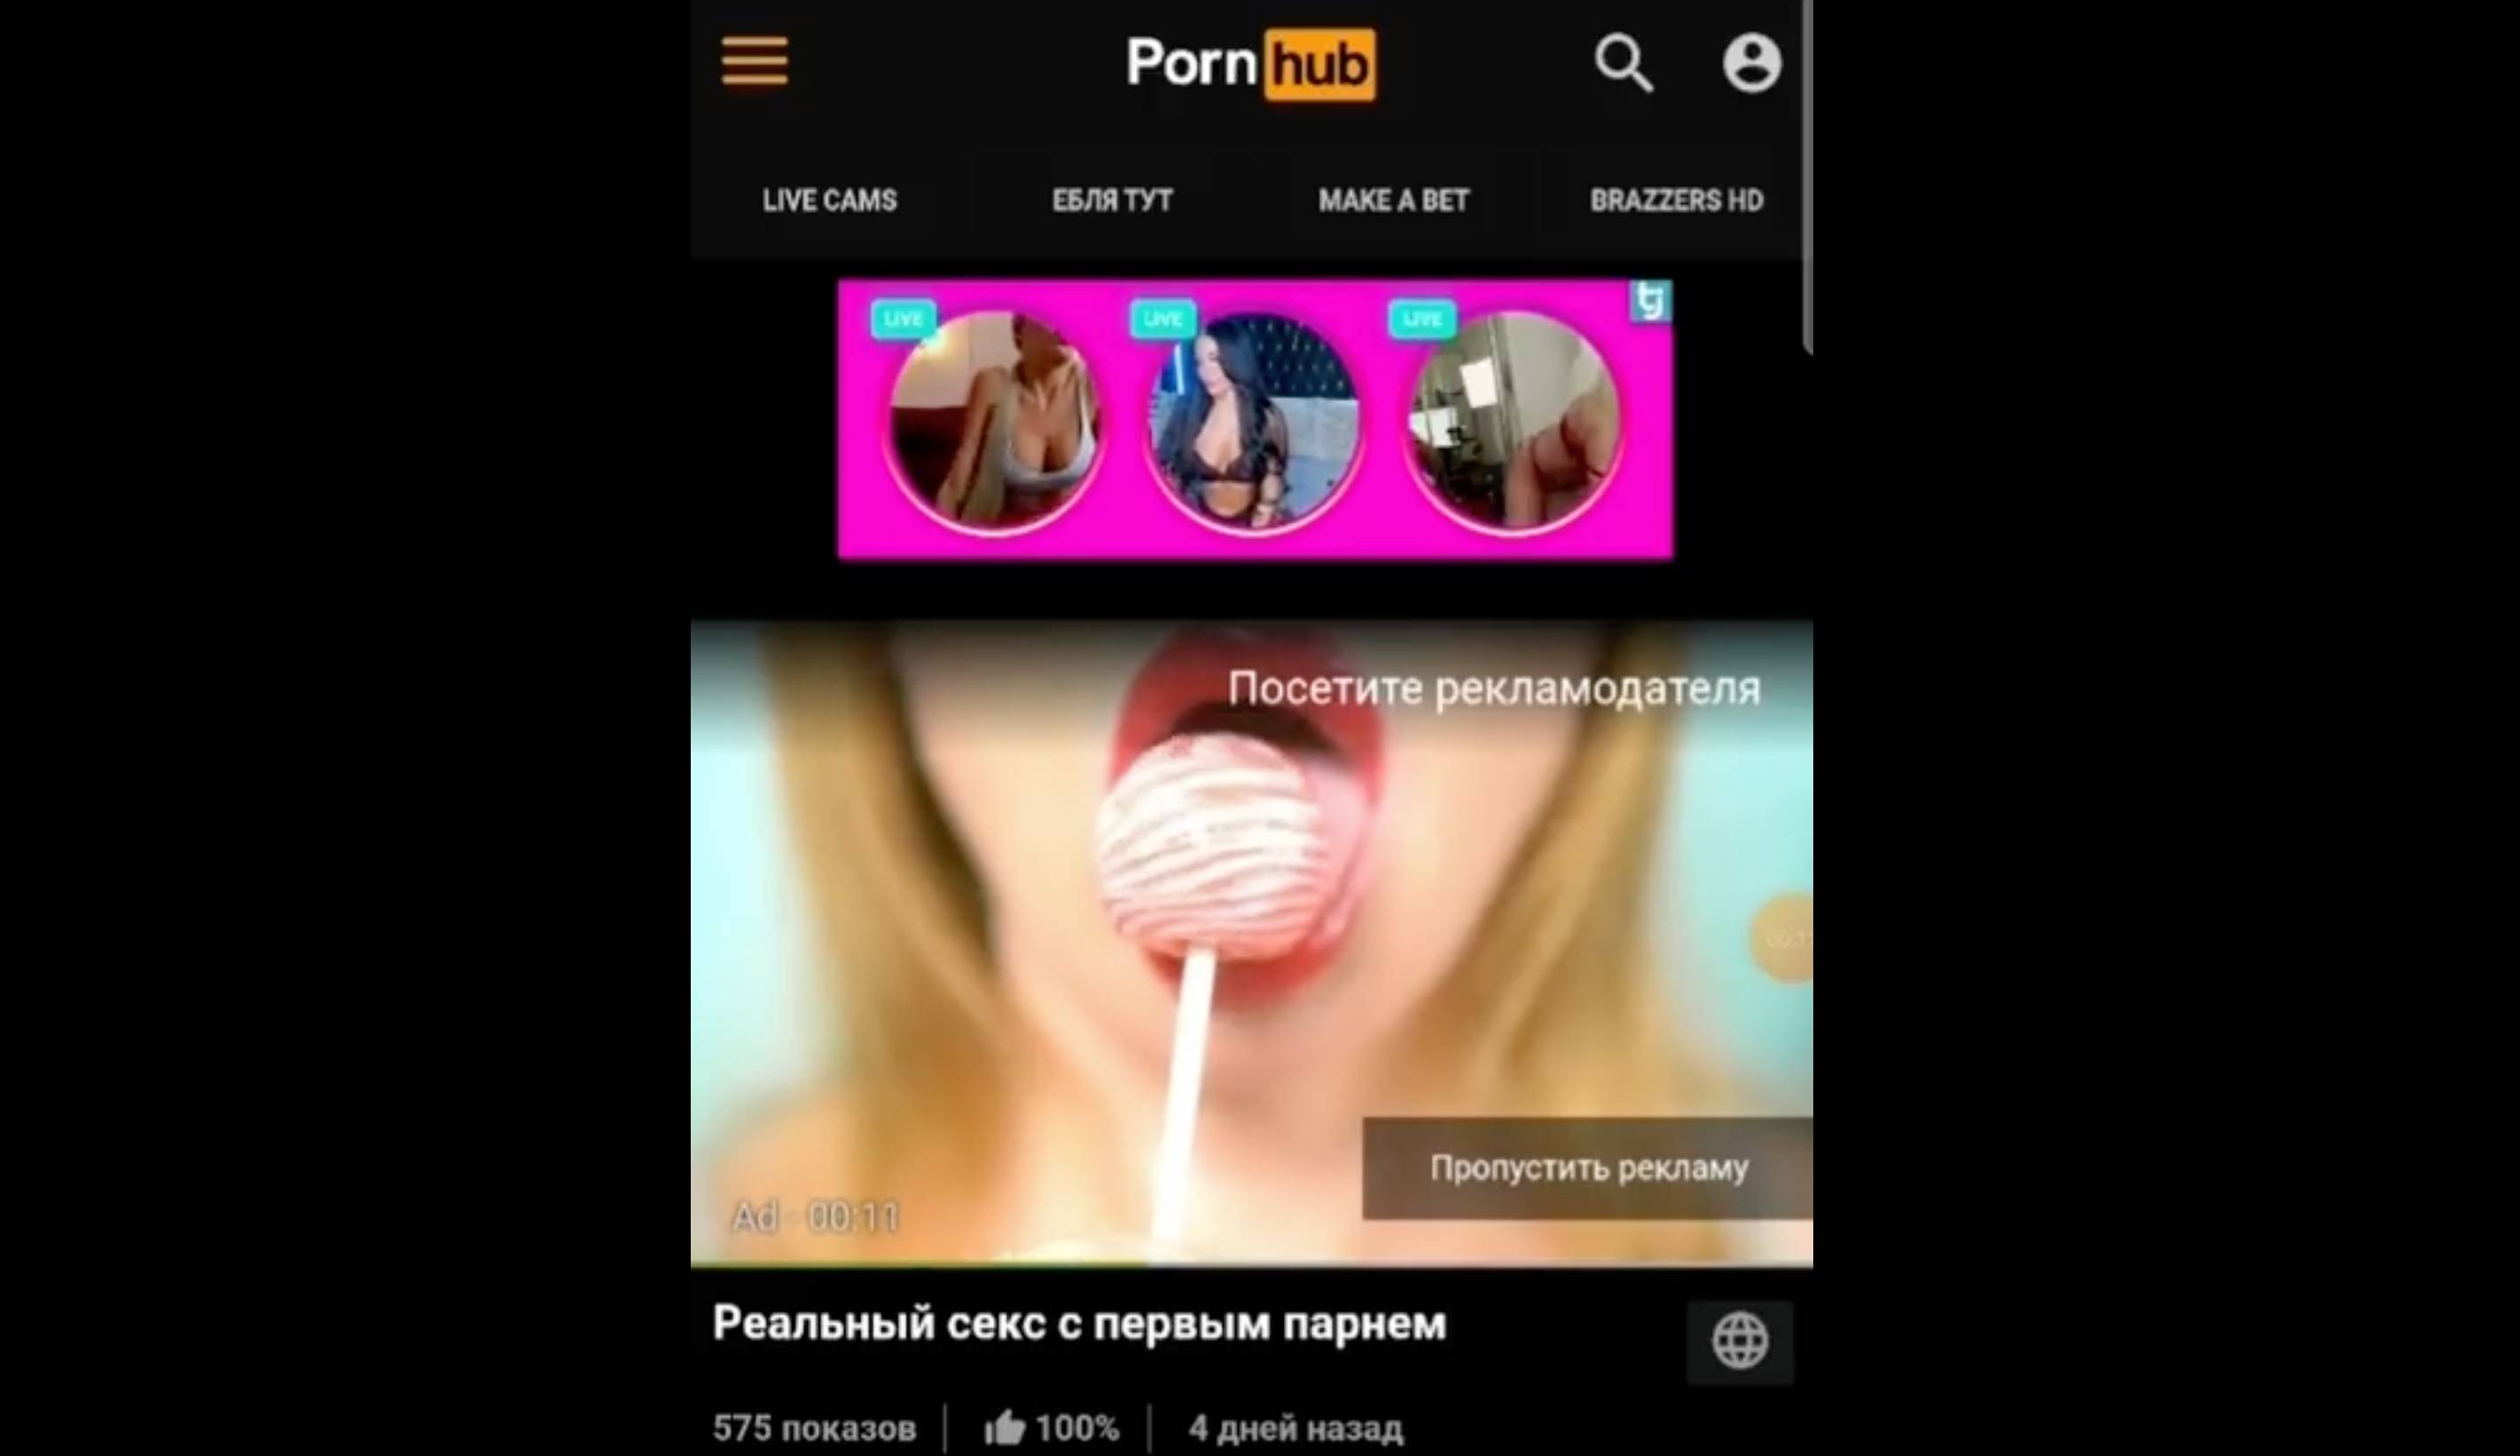 Porahub - Notorious Russian Mercenaries Wagner Are Advertising on Pornhub